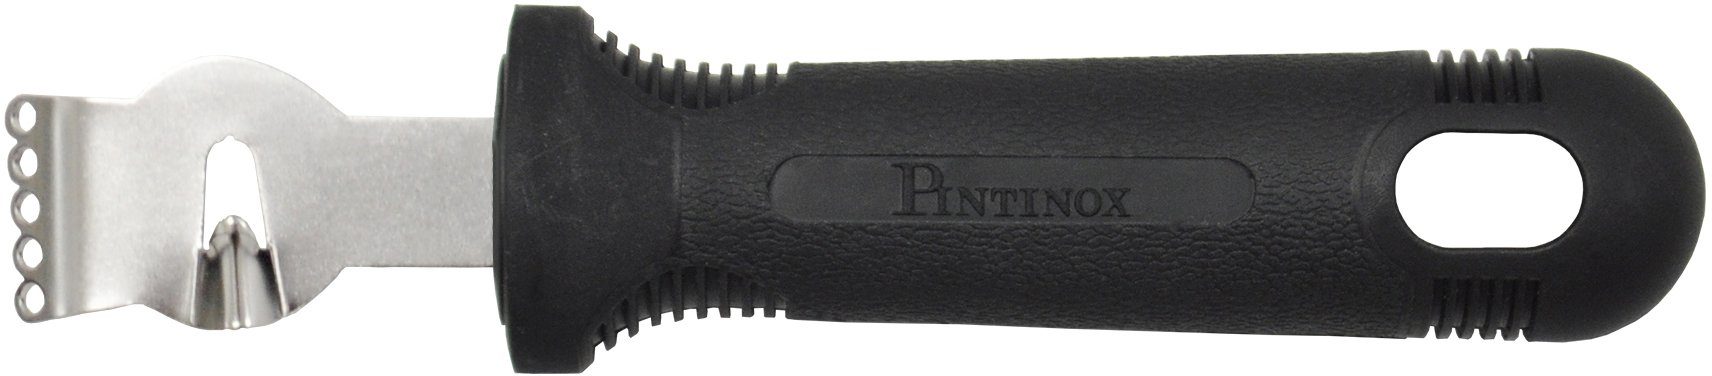 PINTINOX Zitruszester Professional, (Set, 2-tlg), Zitrusfruchtset ( Zitrusmesser und Zester), Edelstahl